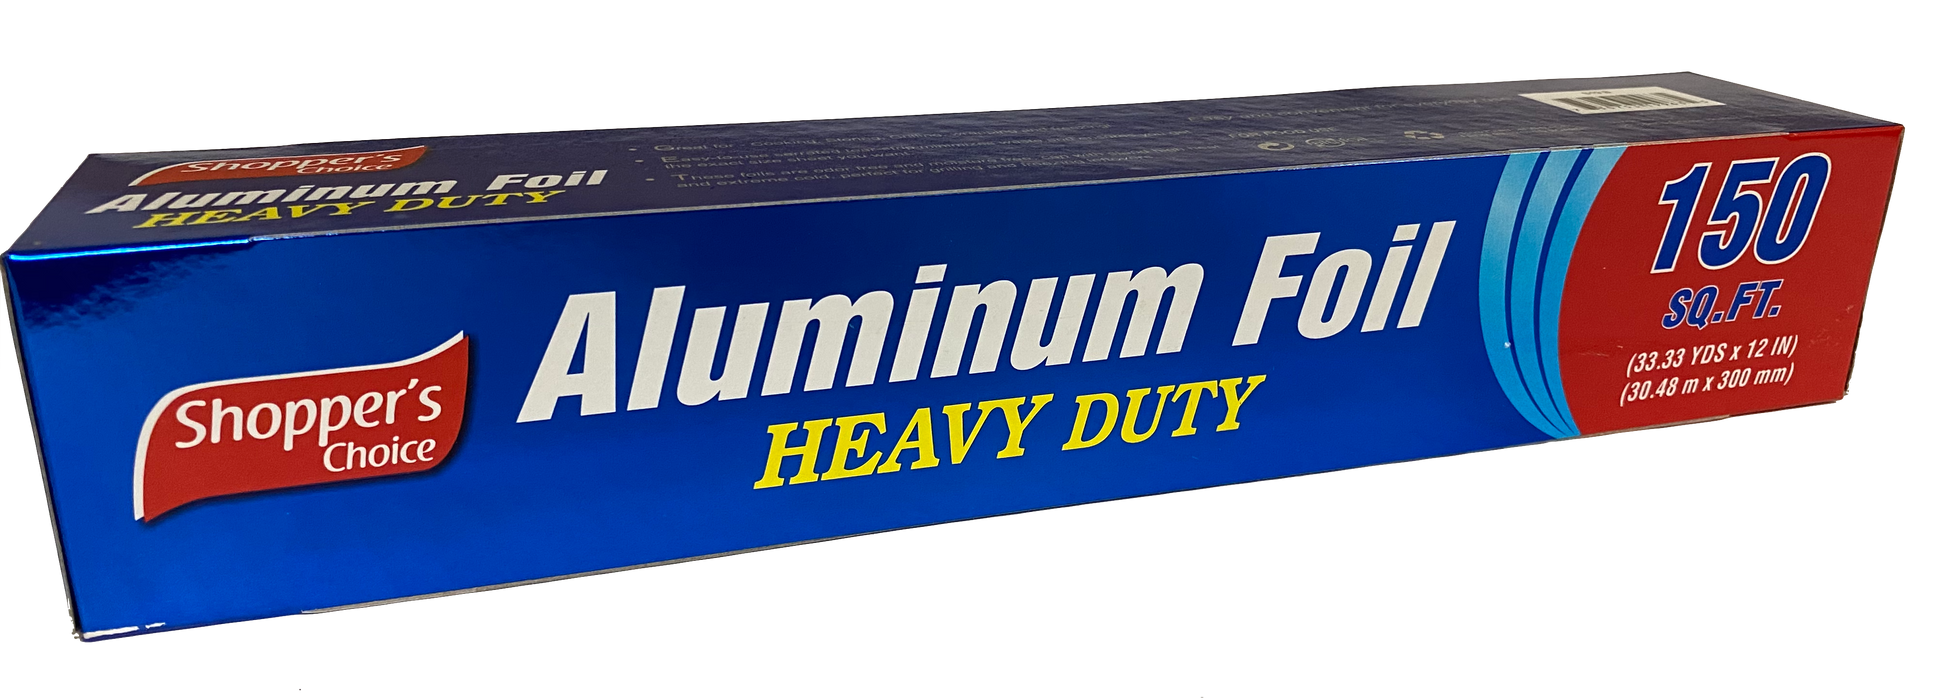 Shopper's Choice Heavy Duty Aluminum Foil 150sqft